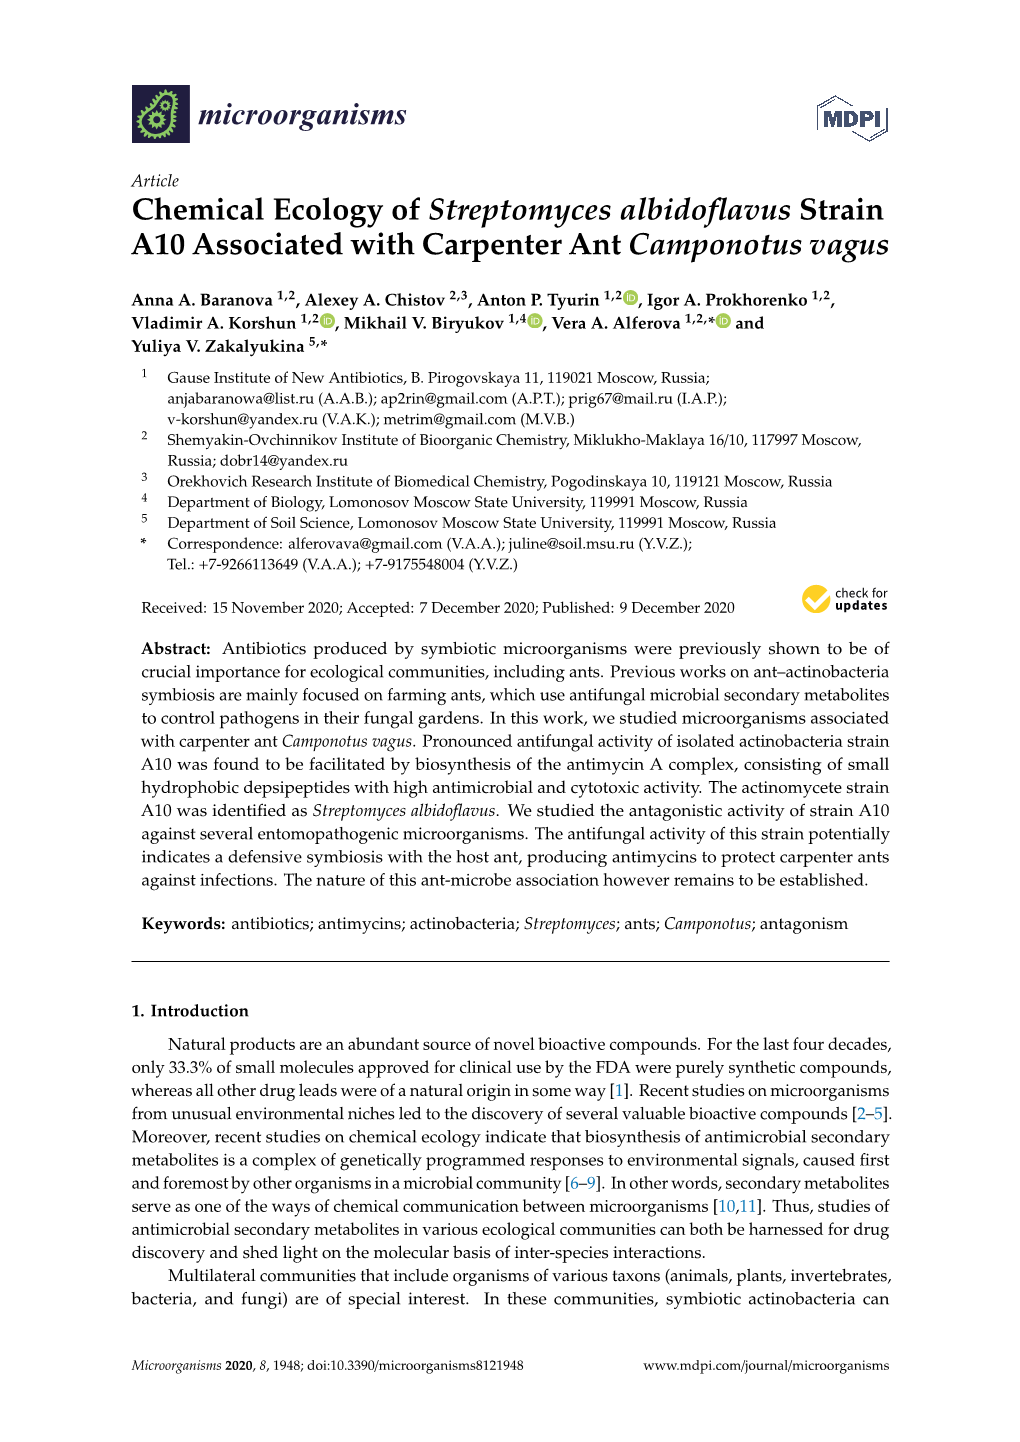 Chemical Ecology of Streptomyces Albidoflavus Strain A10 Associated